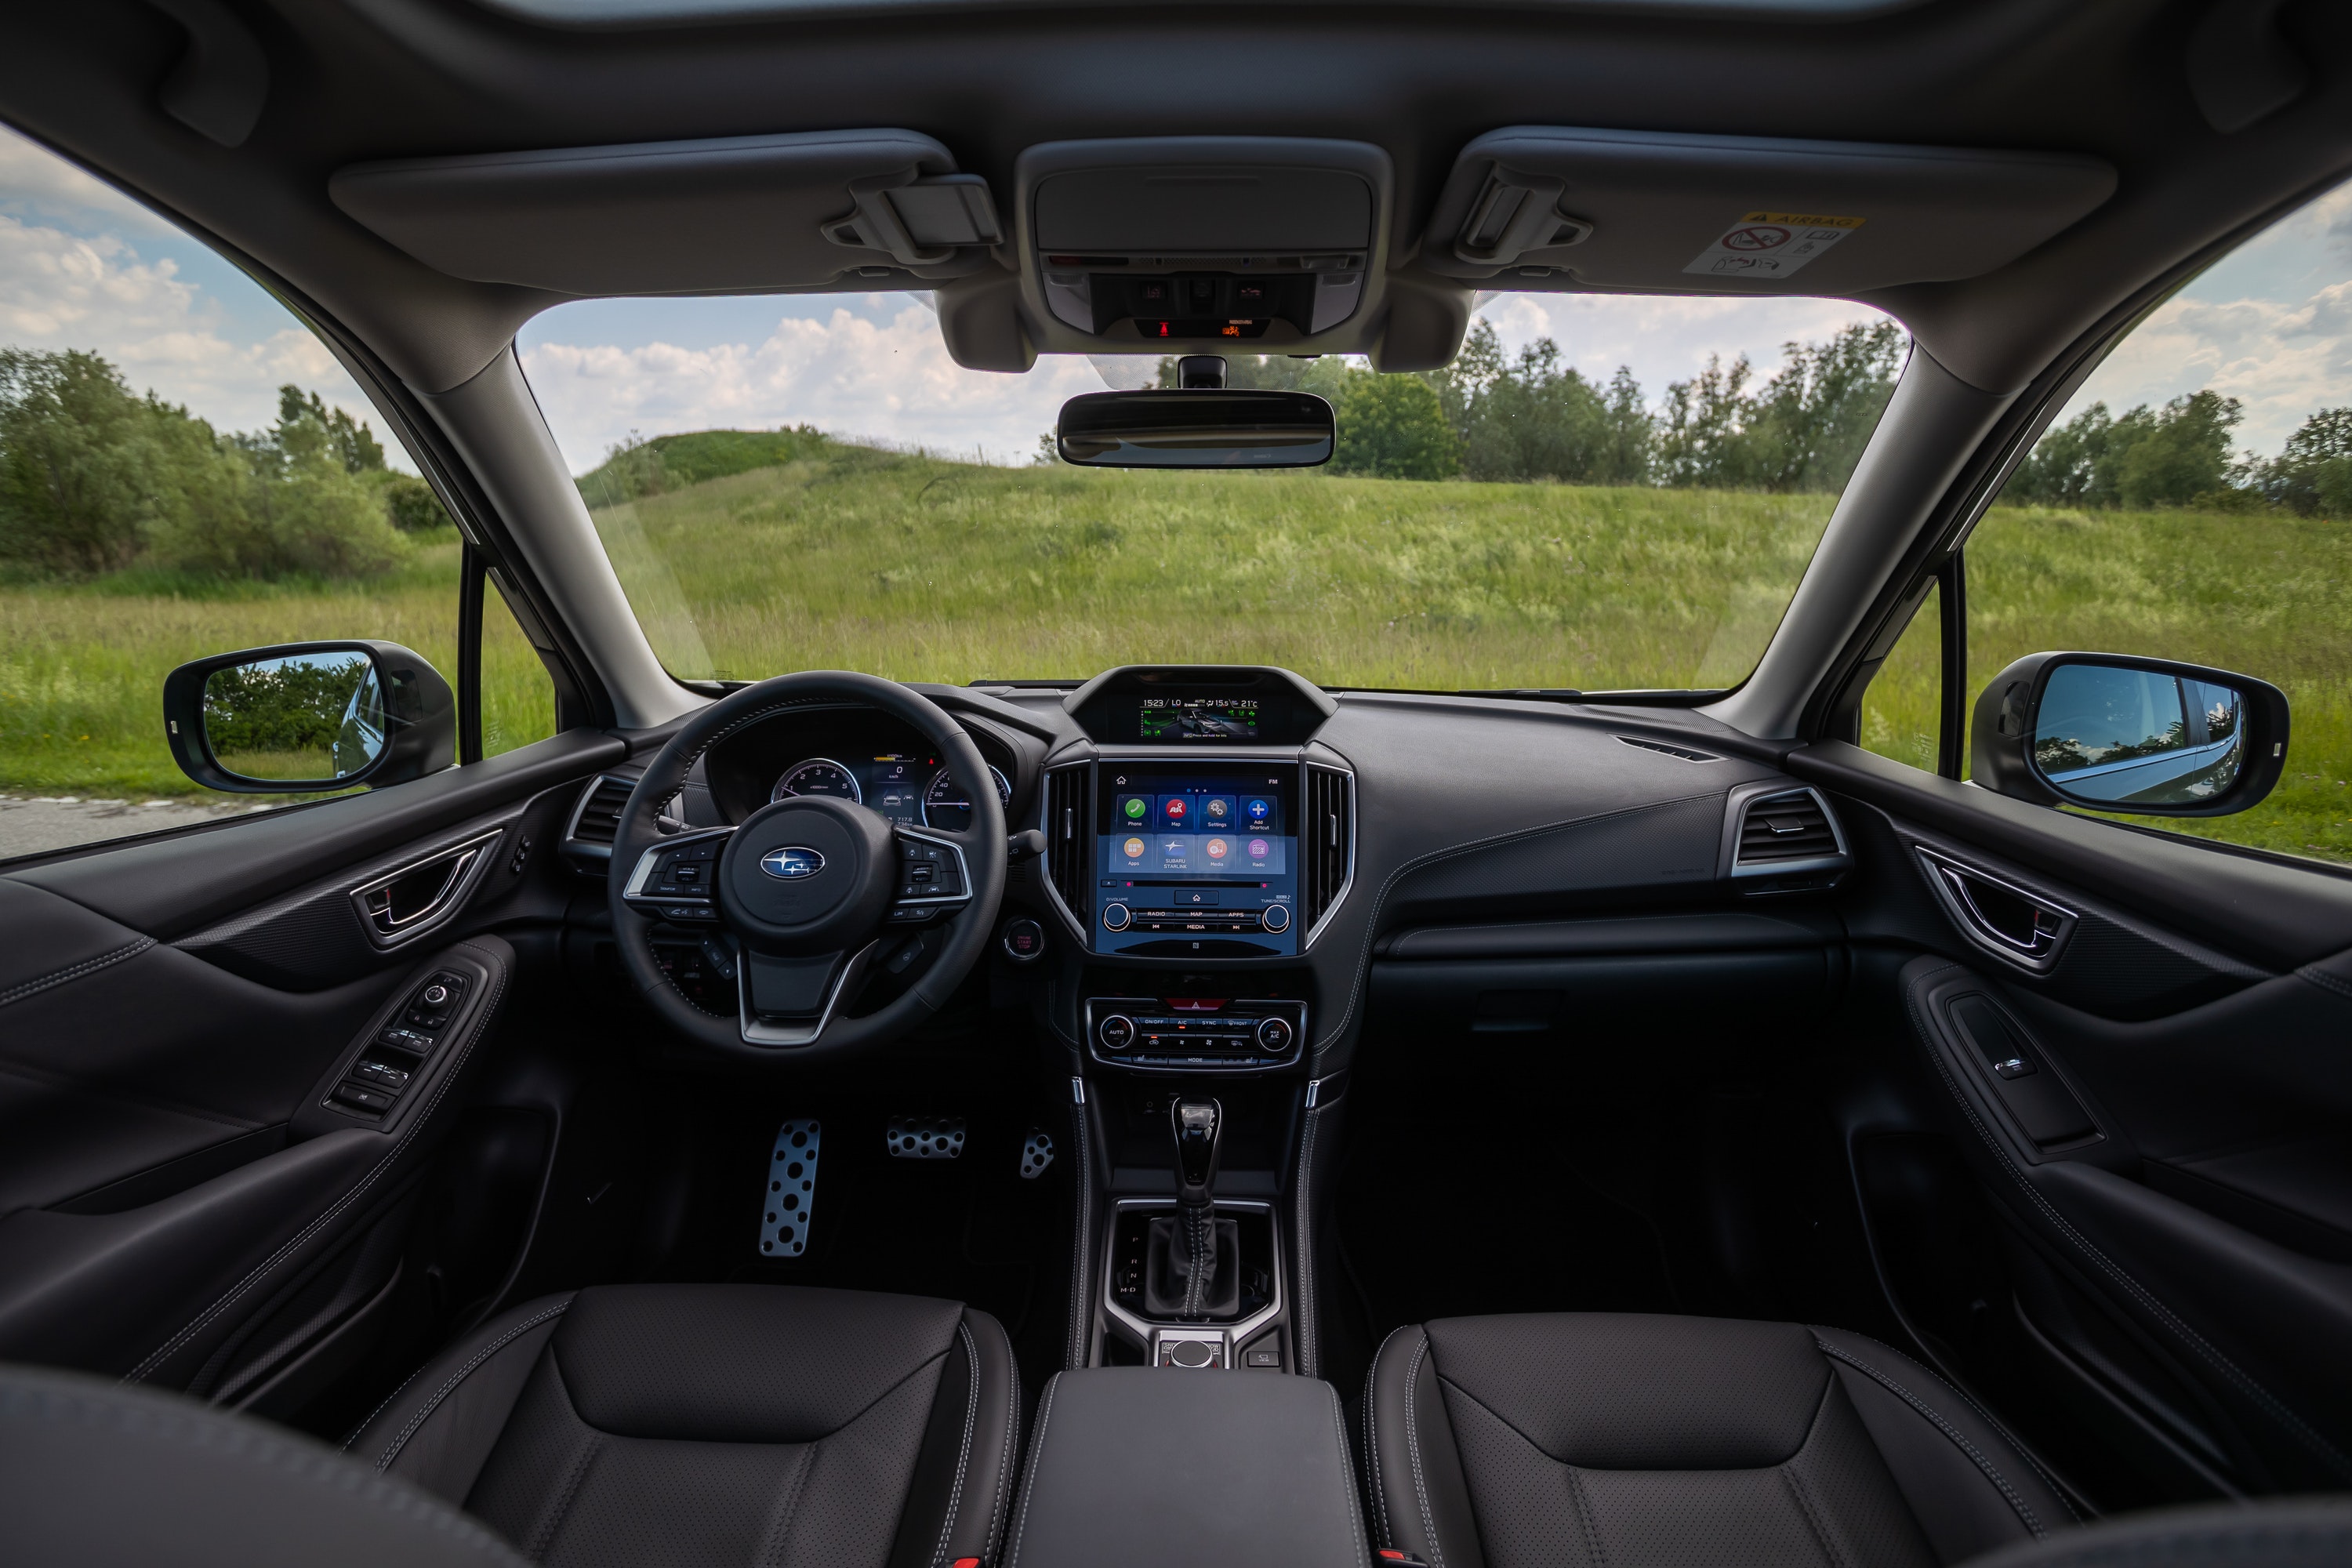 Interior of the Subaru Forester